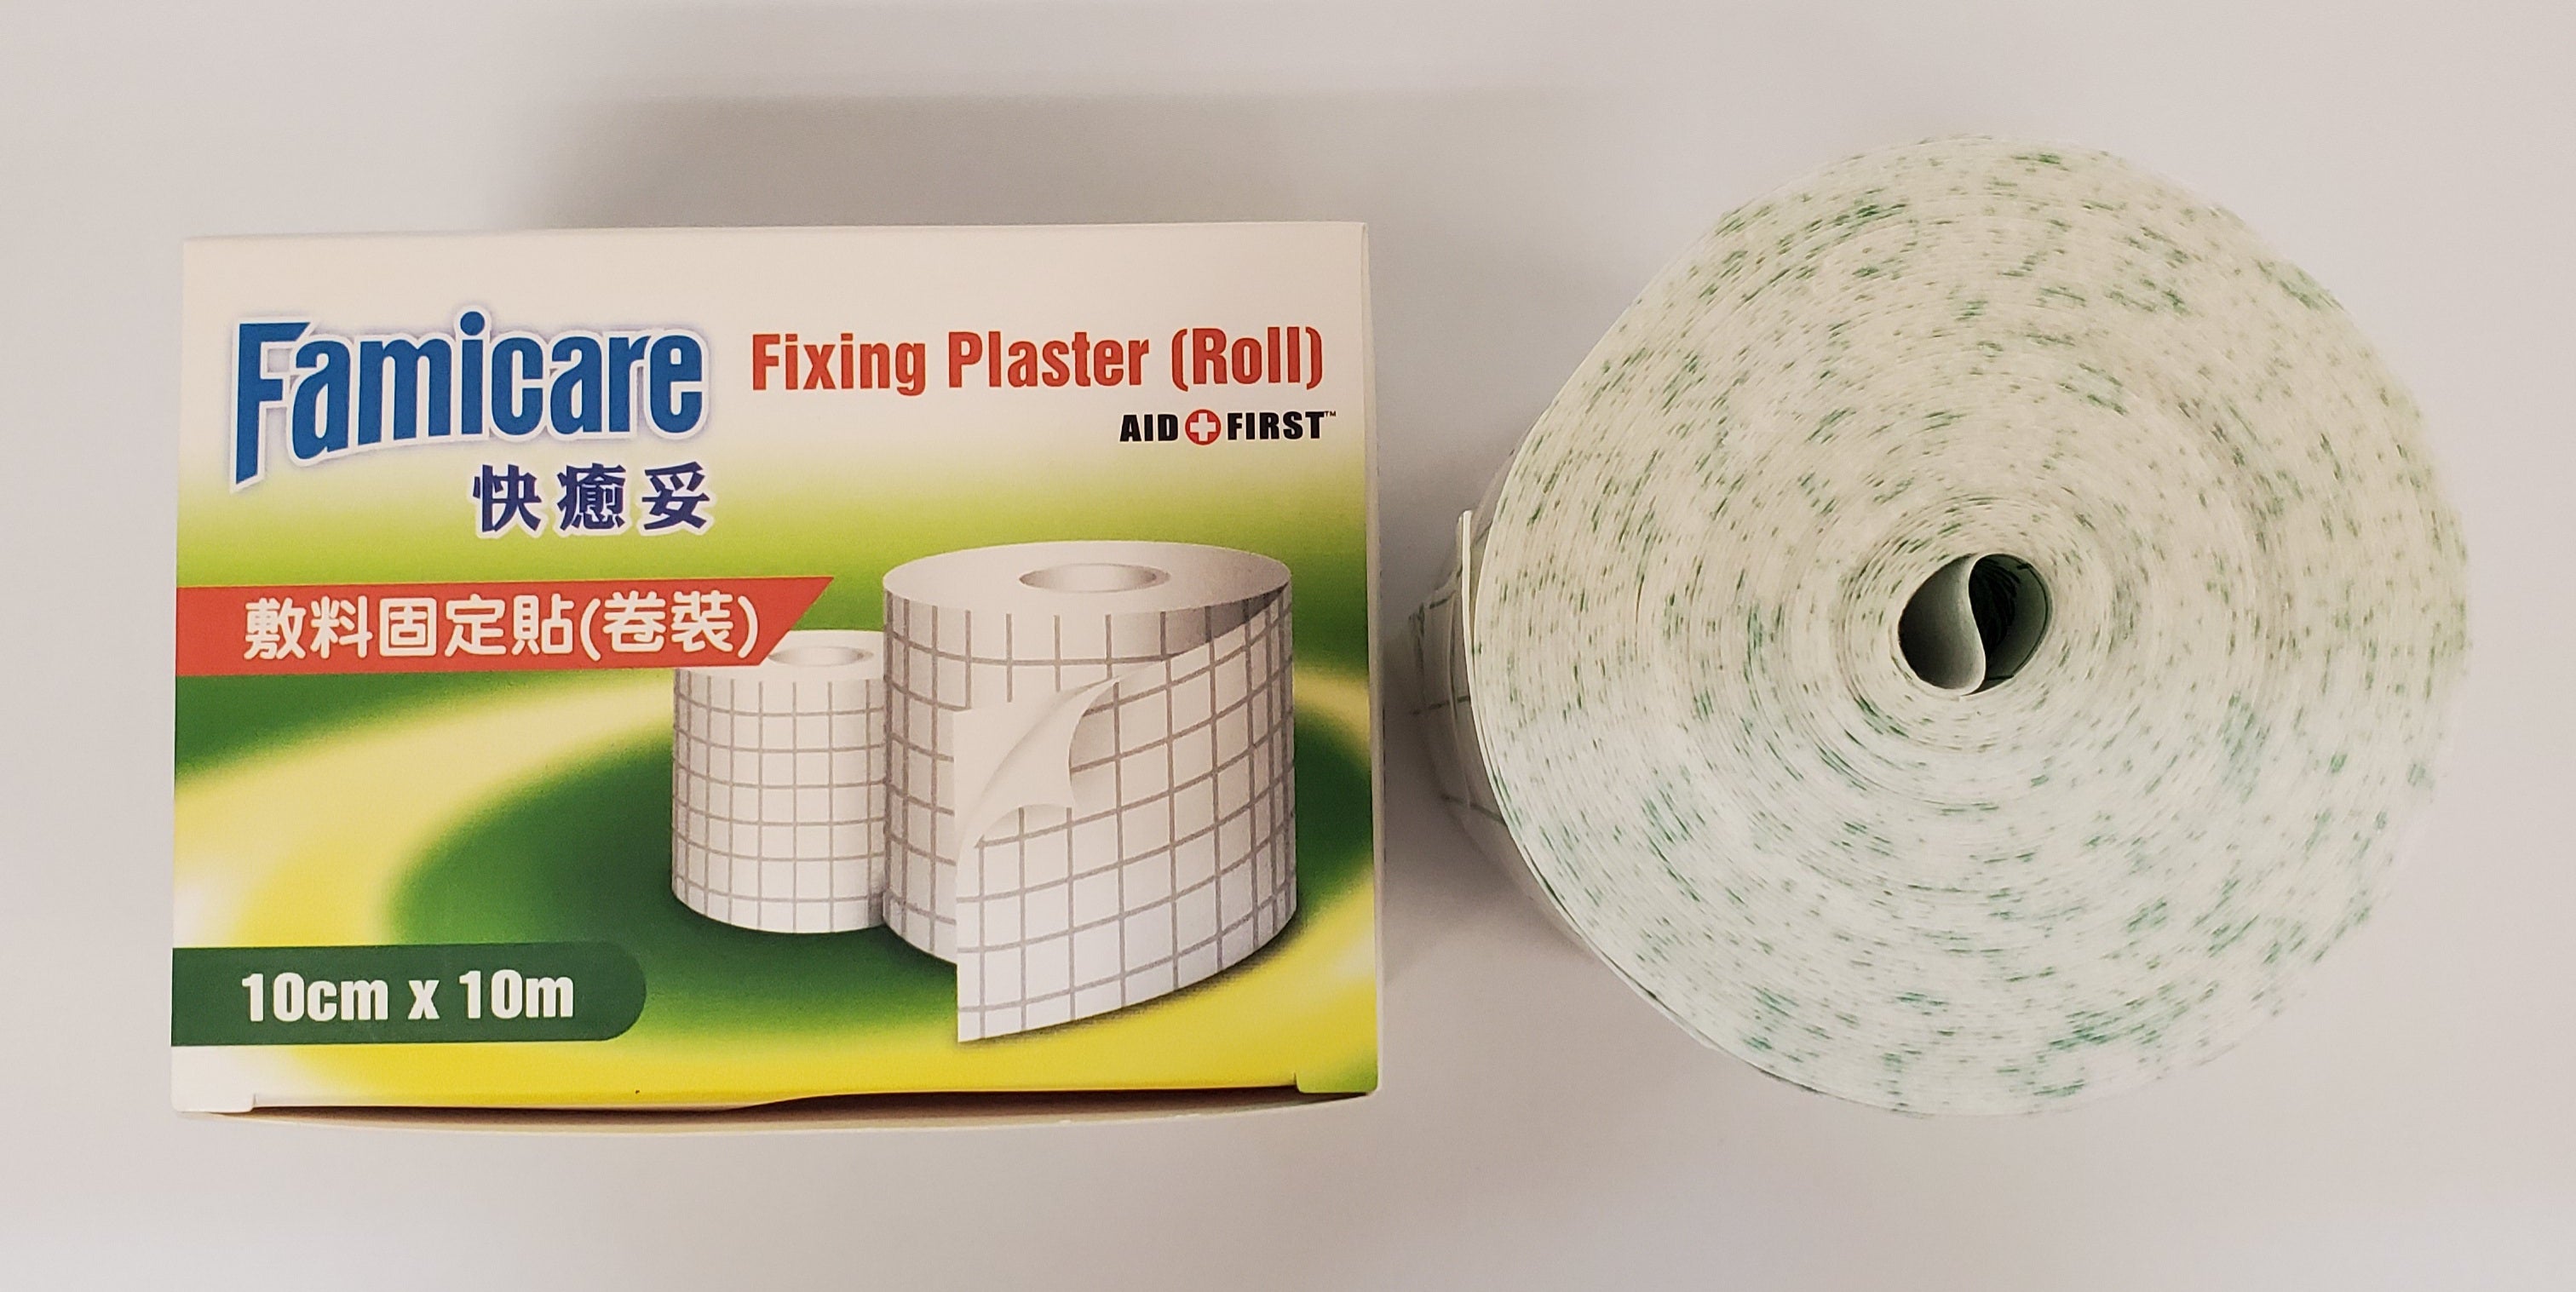 Famicare Fixing Plaster (Roll)